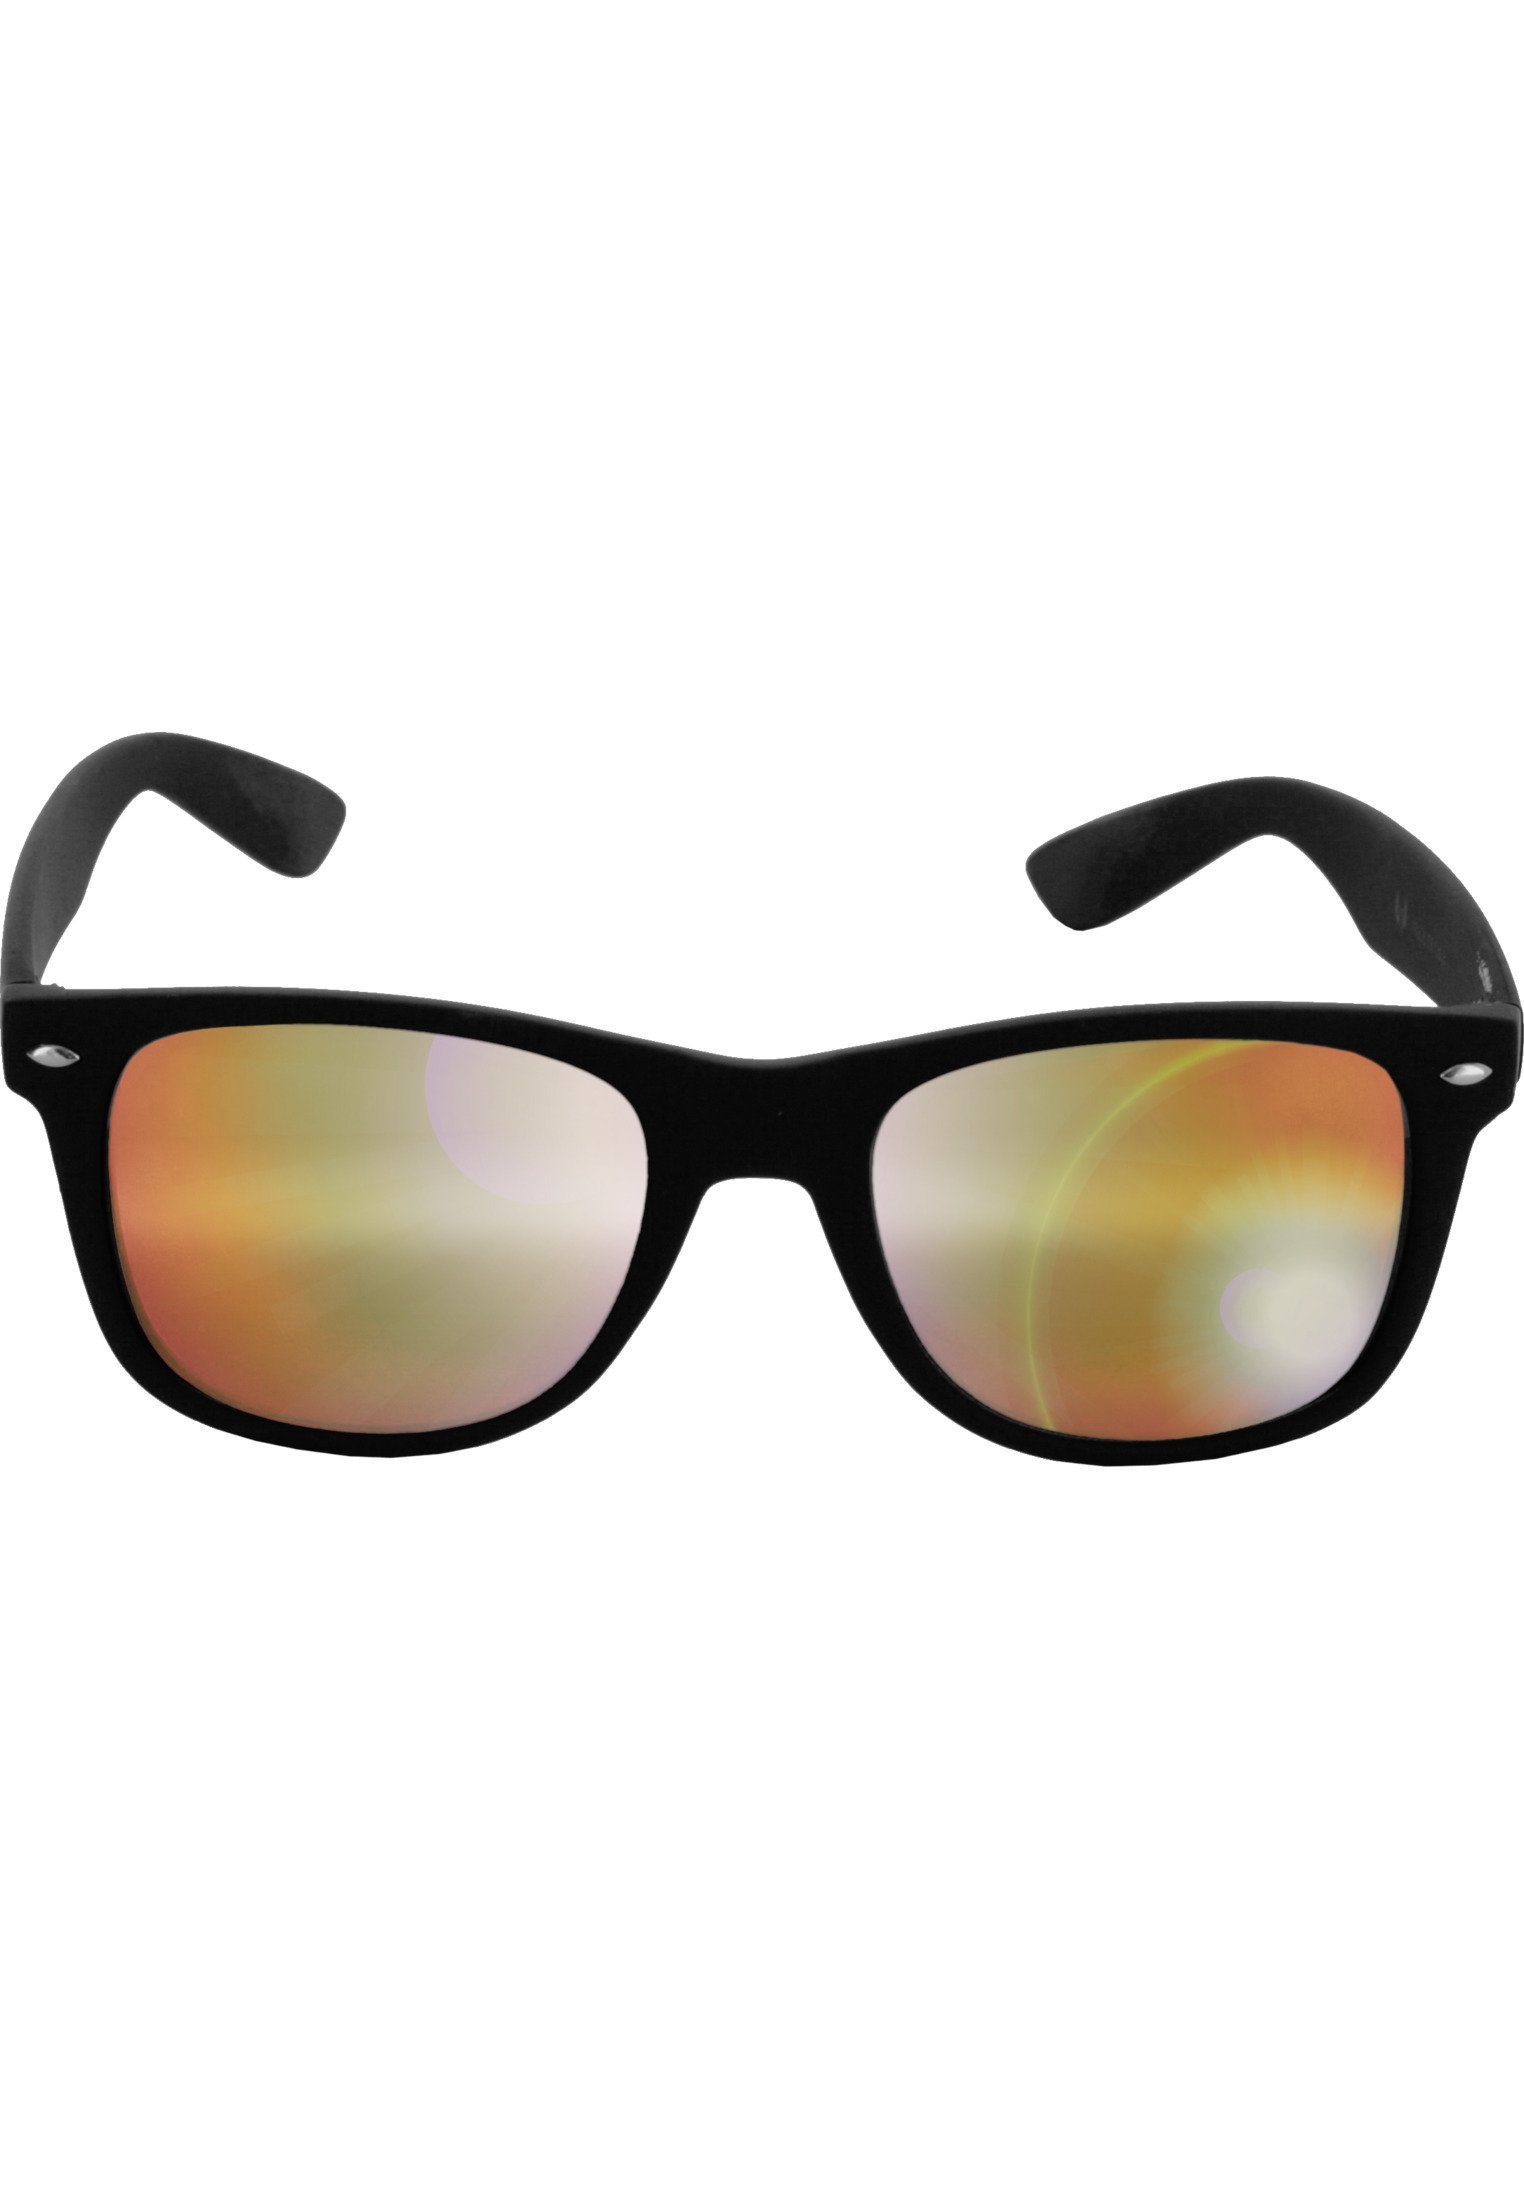 Likoma MSTRDS Sonnenbrille Mirror blk/orange Sunglasses Accessoires